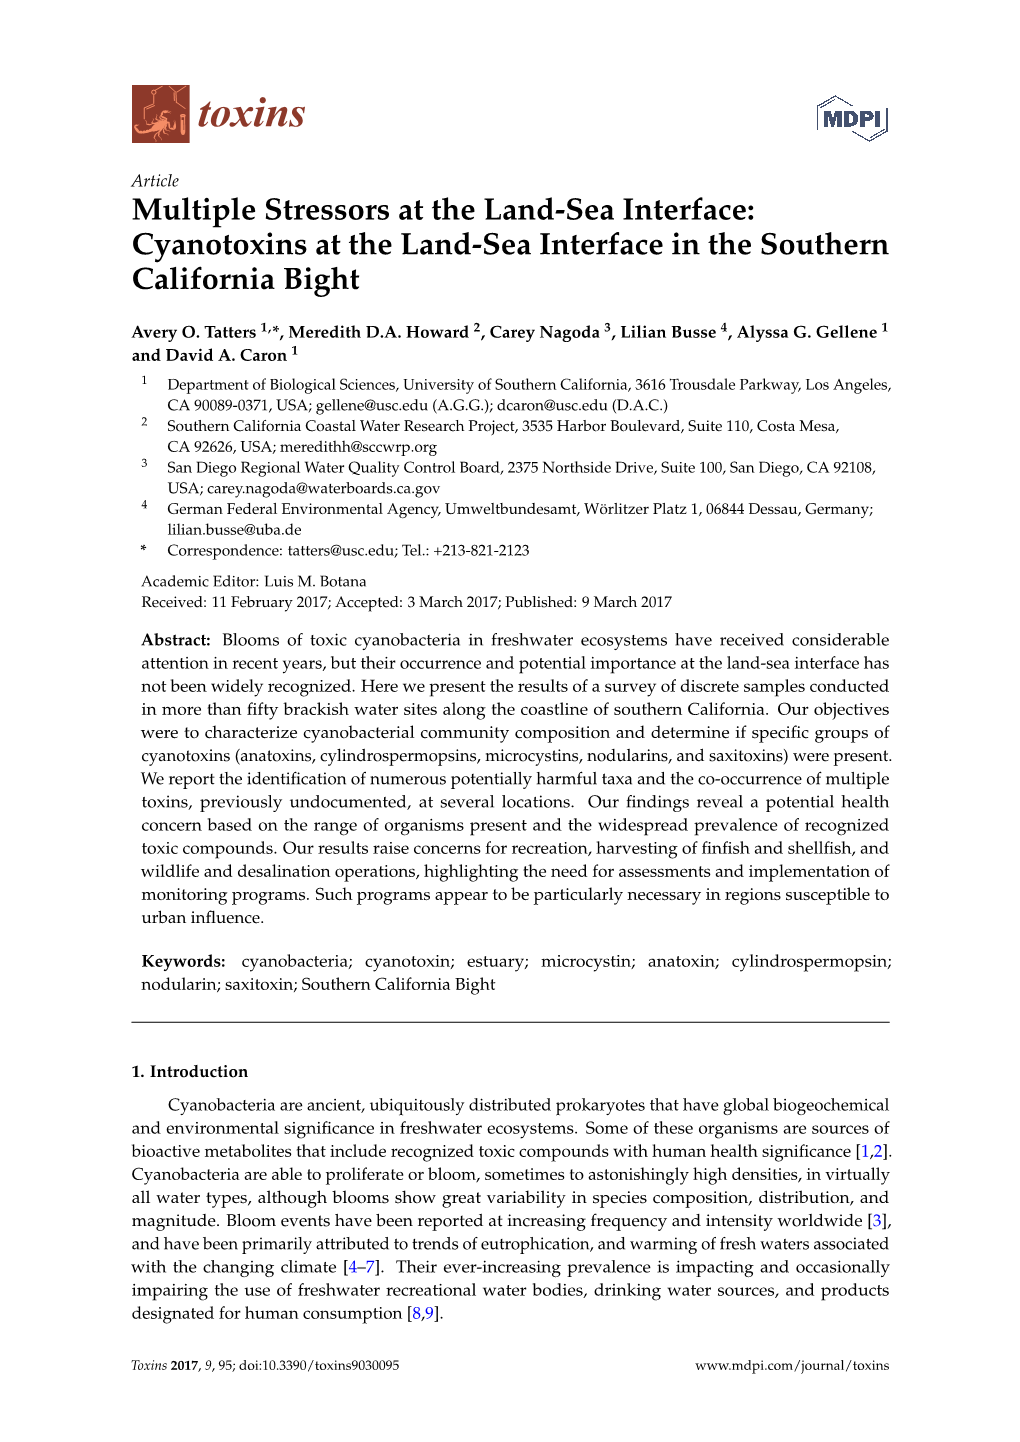 Cyanotoxins at the Land-Sea Interface in the Southern California Bight